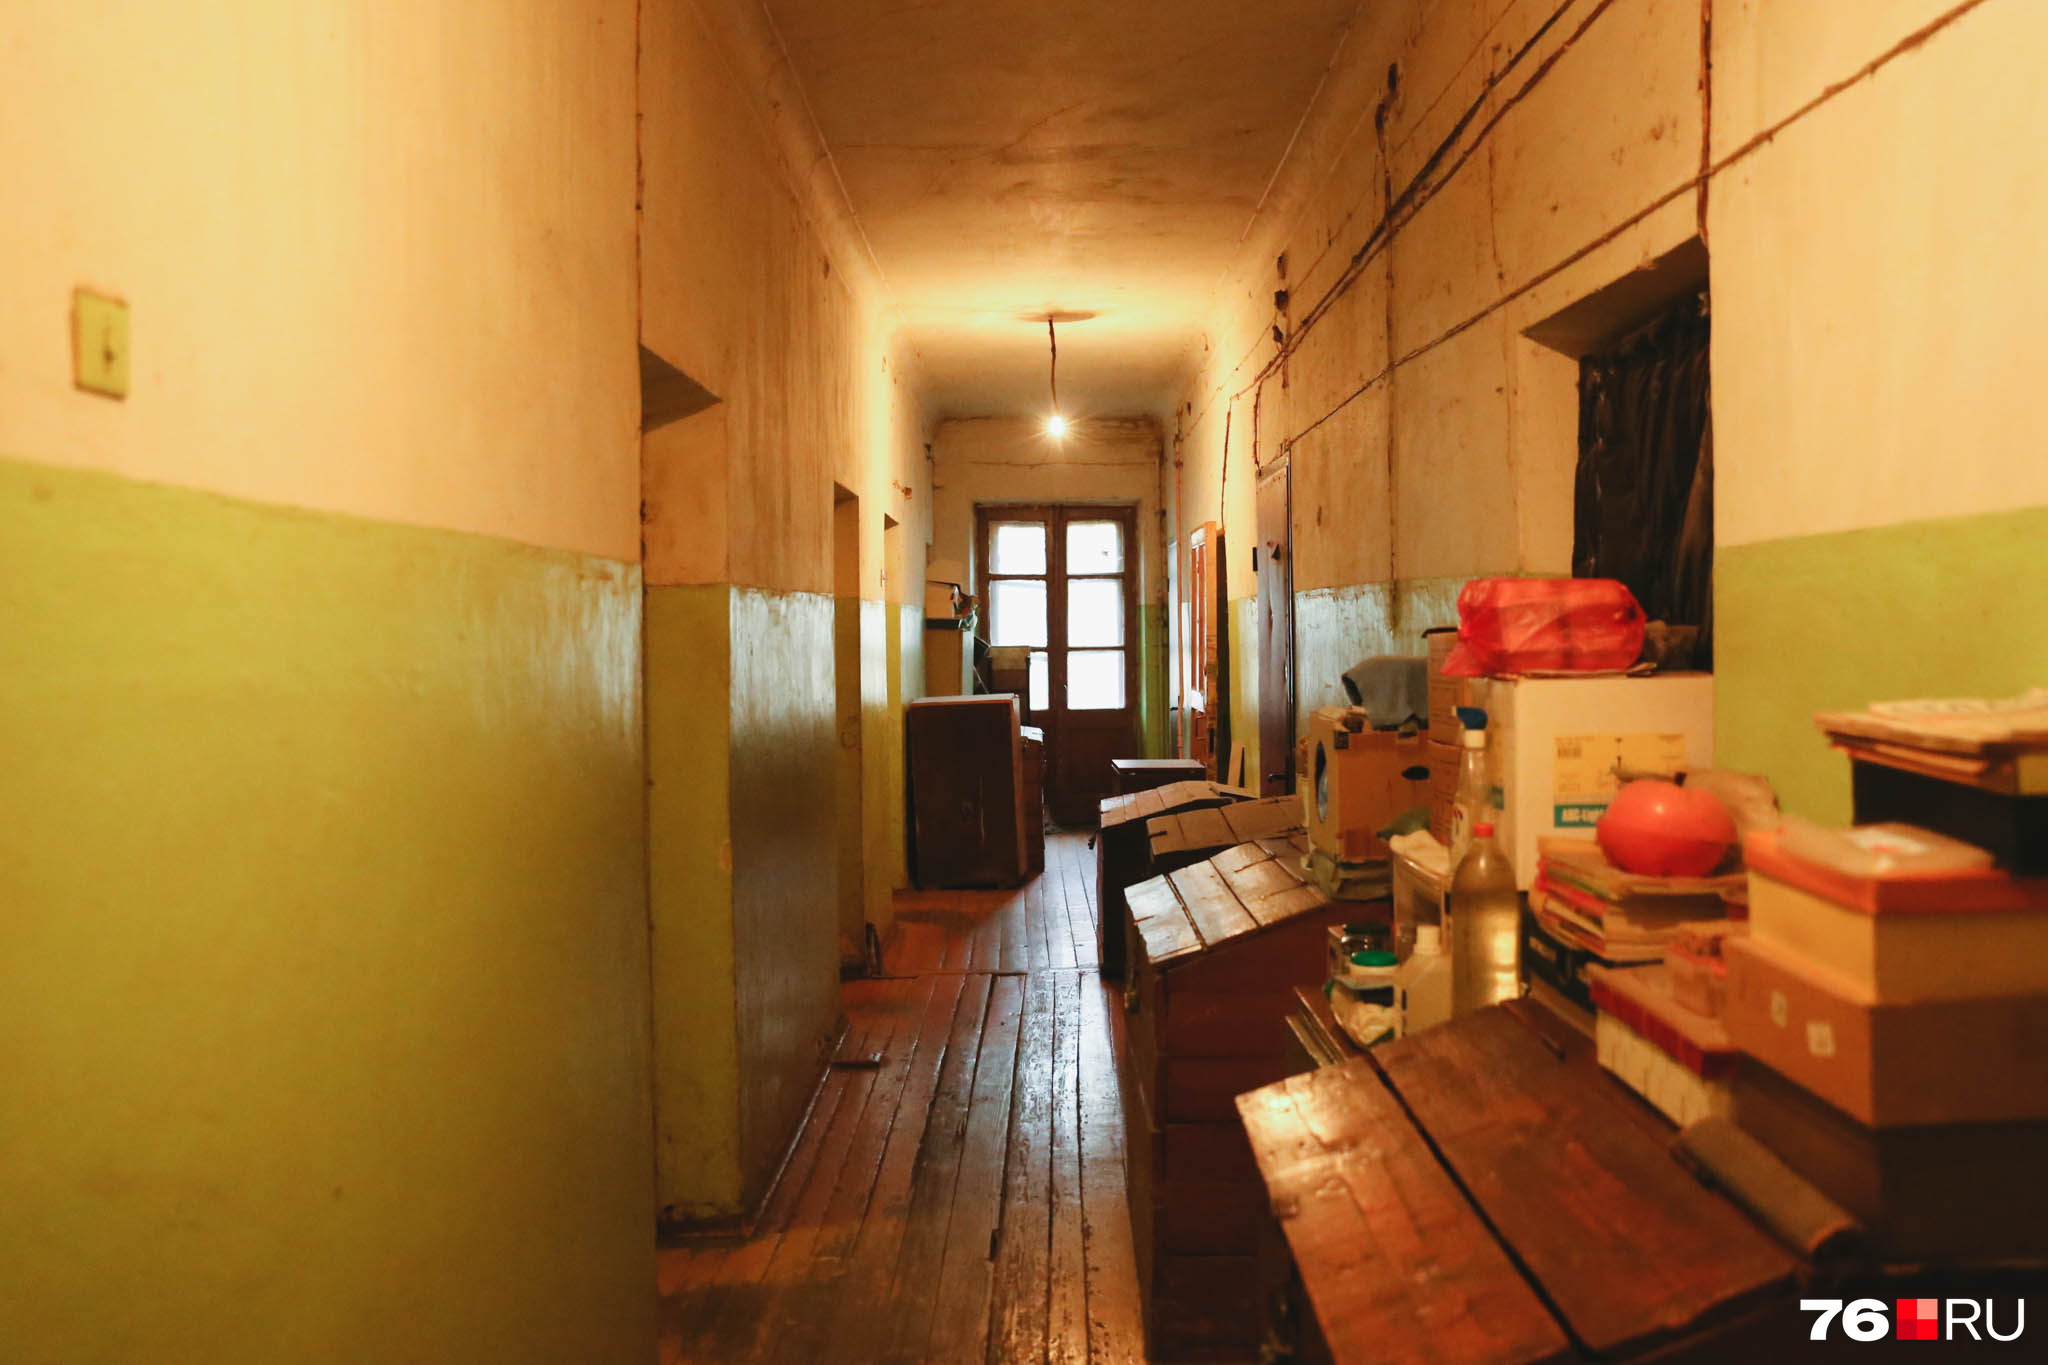 На Свердлова, 81 люди живут в комнатах, кухня и санузлы — общие